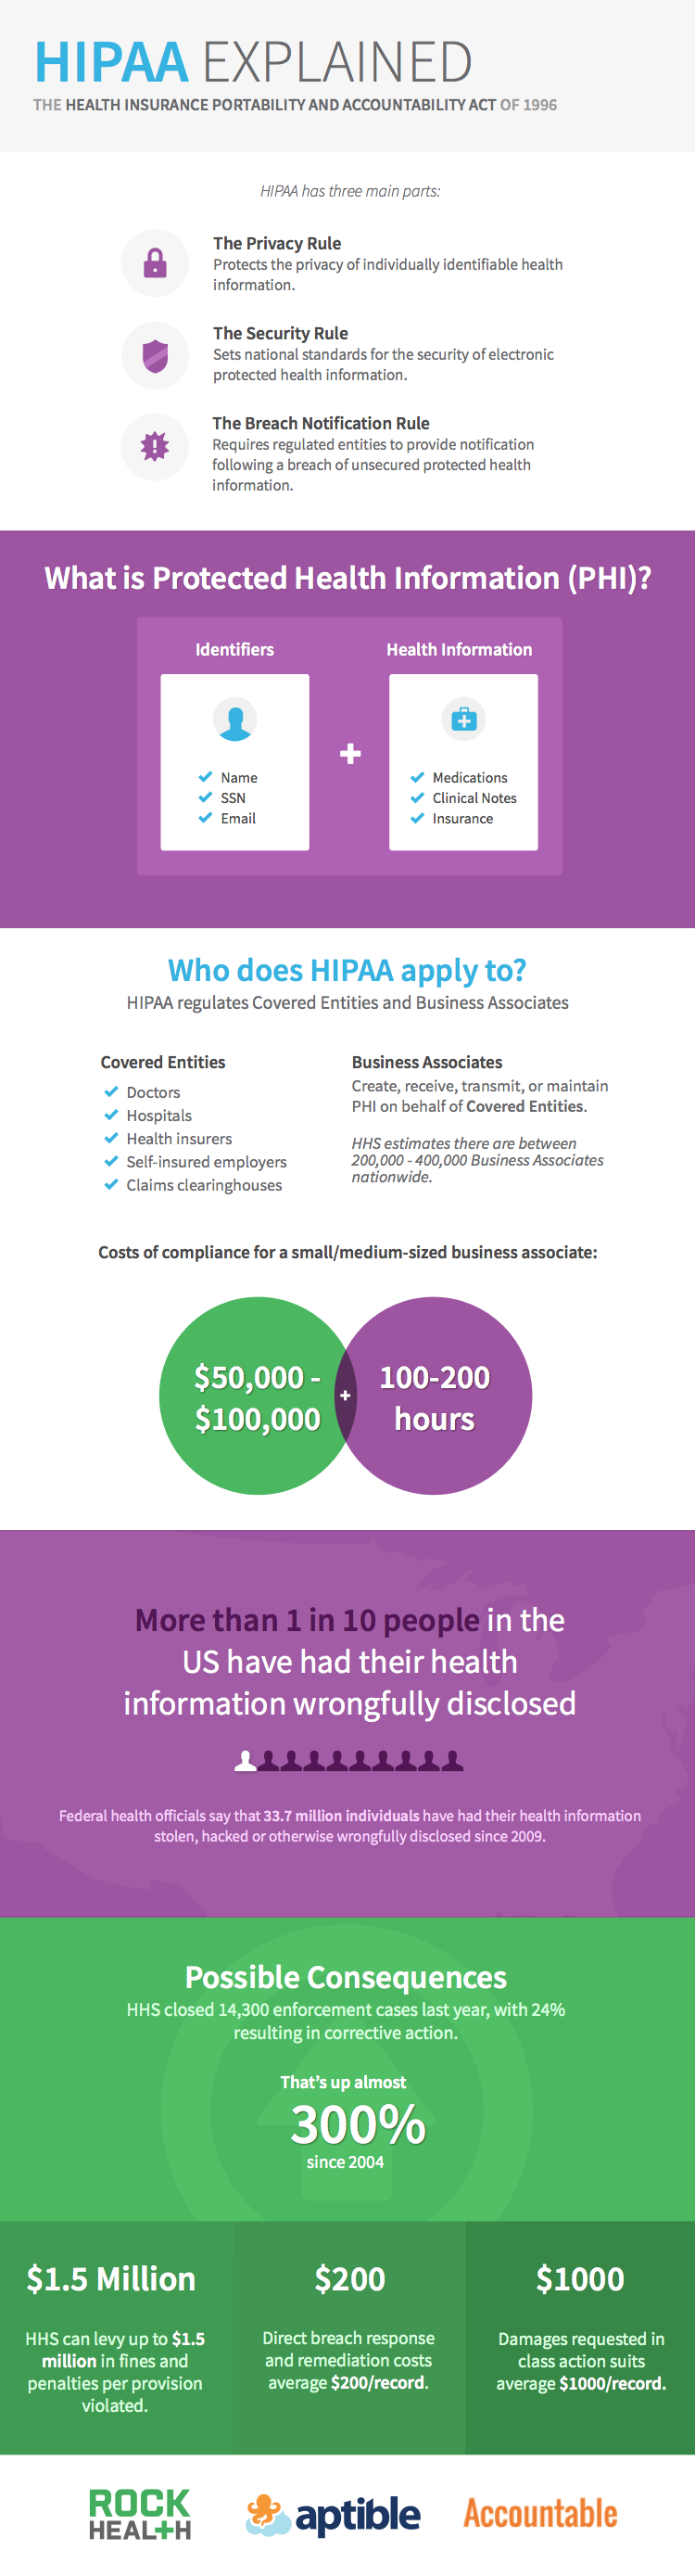 HIPAA Rock Health infographic aptible